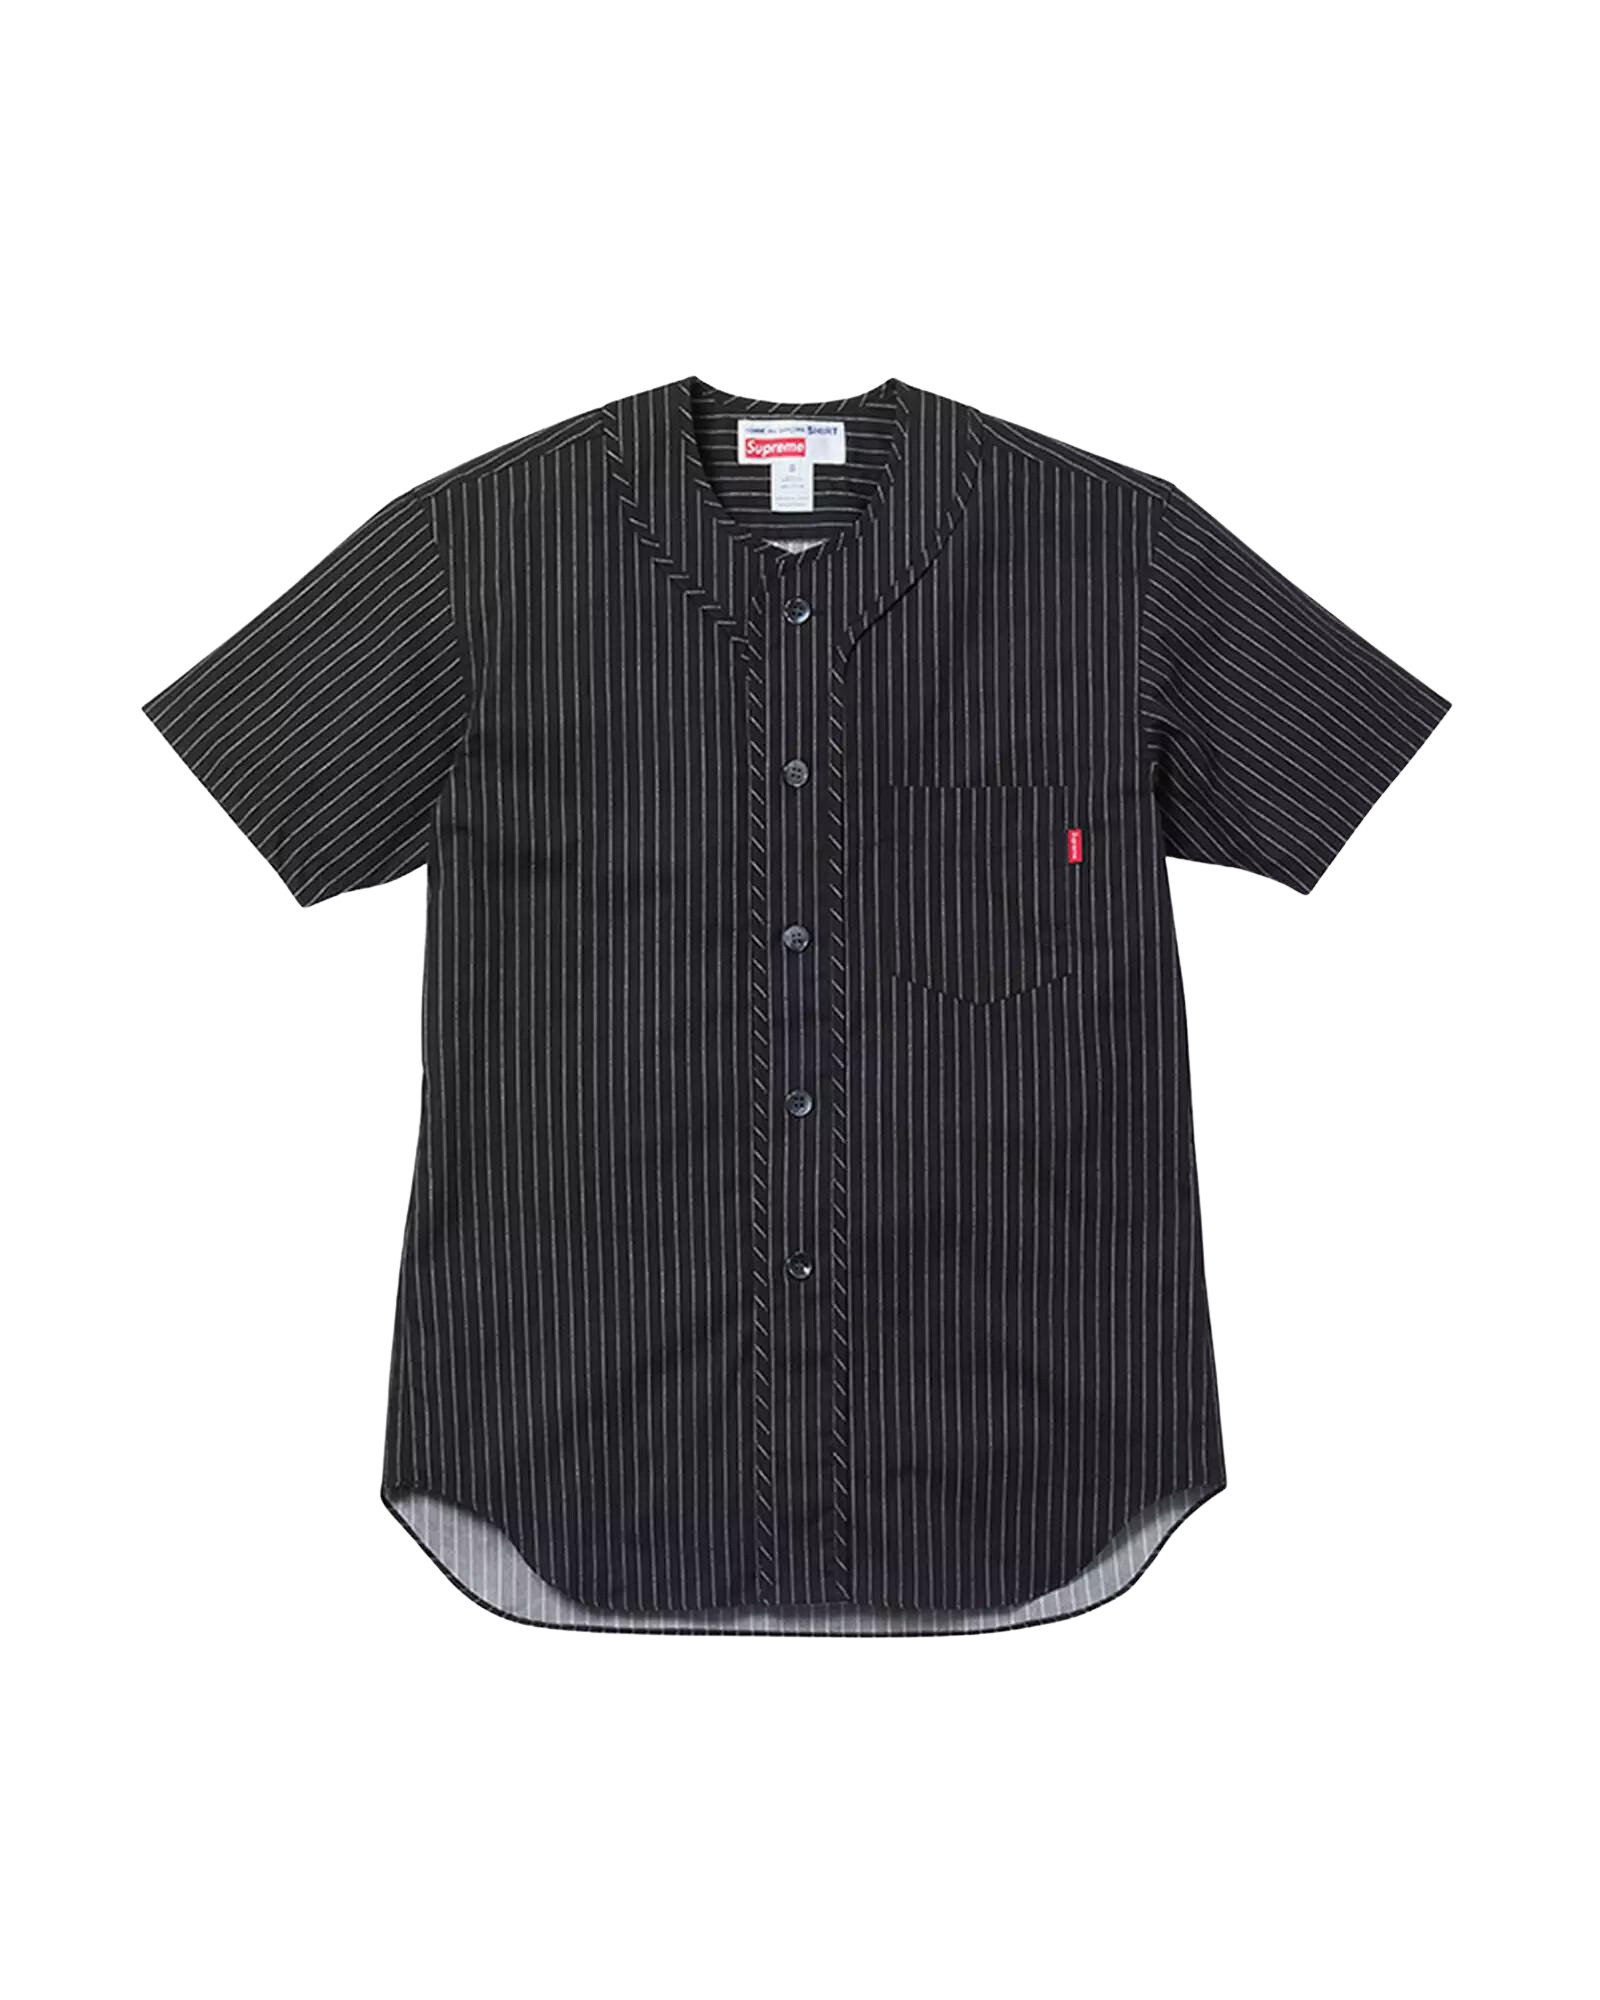 Pre Loved - Supreme X Comme Des Garcons Black Stripe Button Up Shirt Size Small